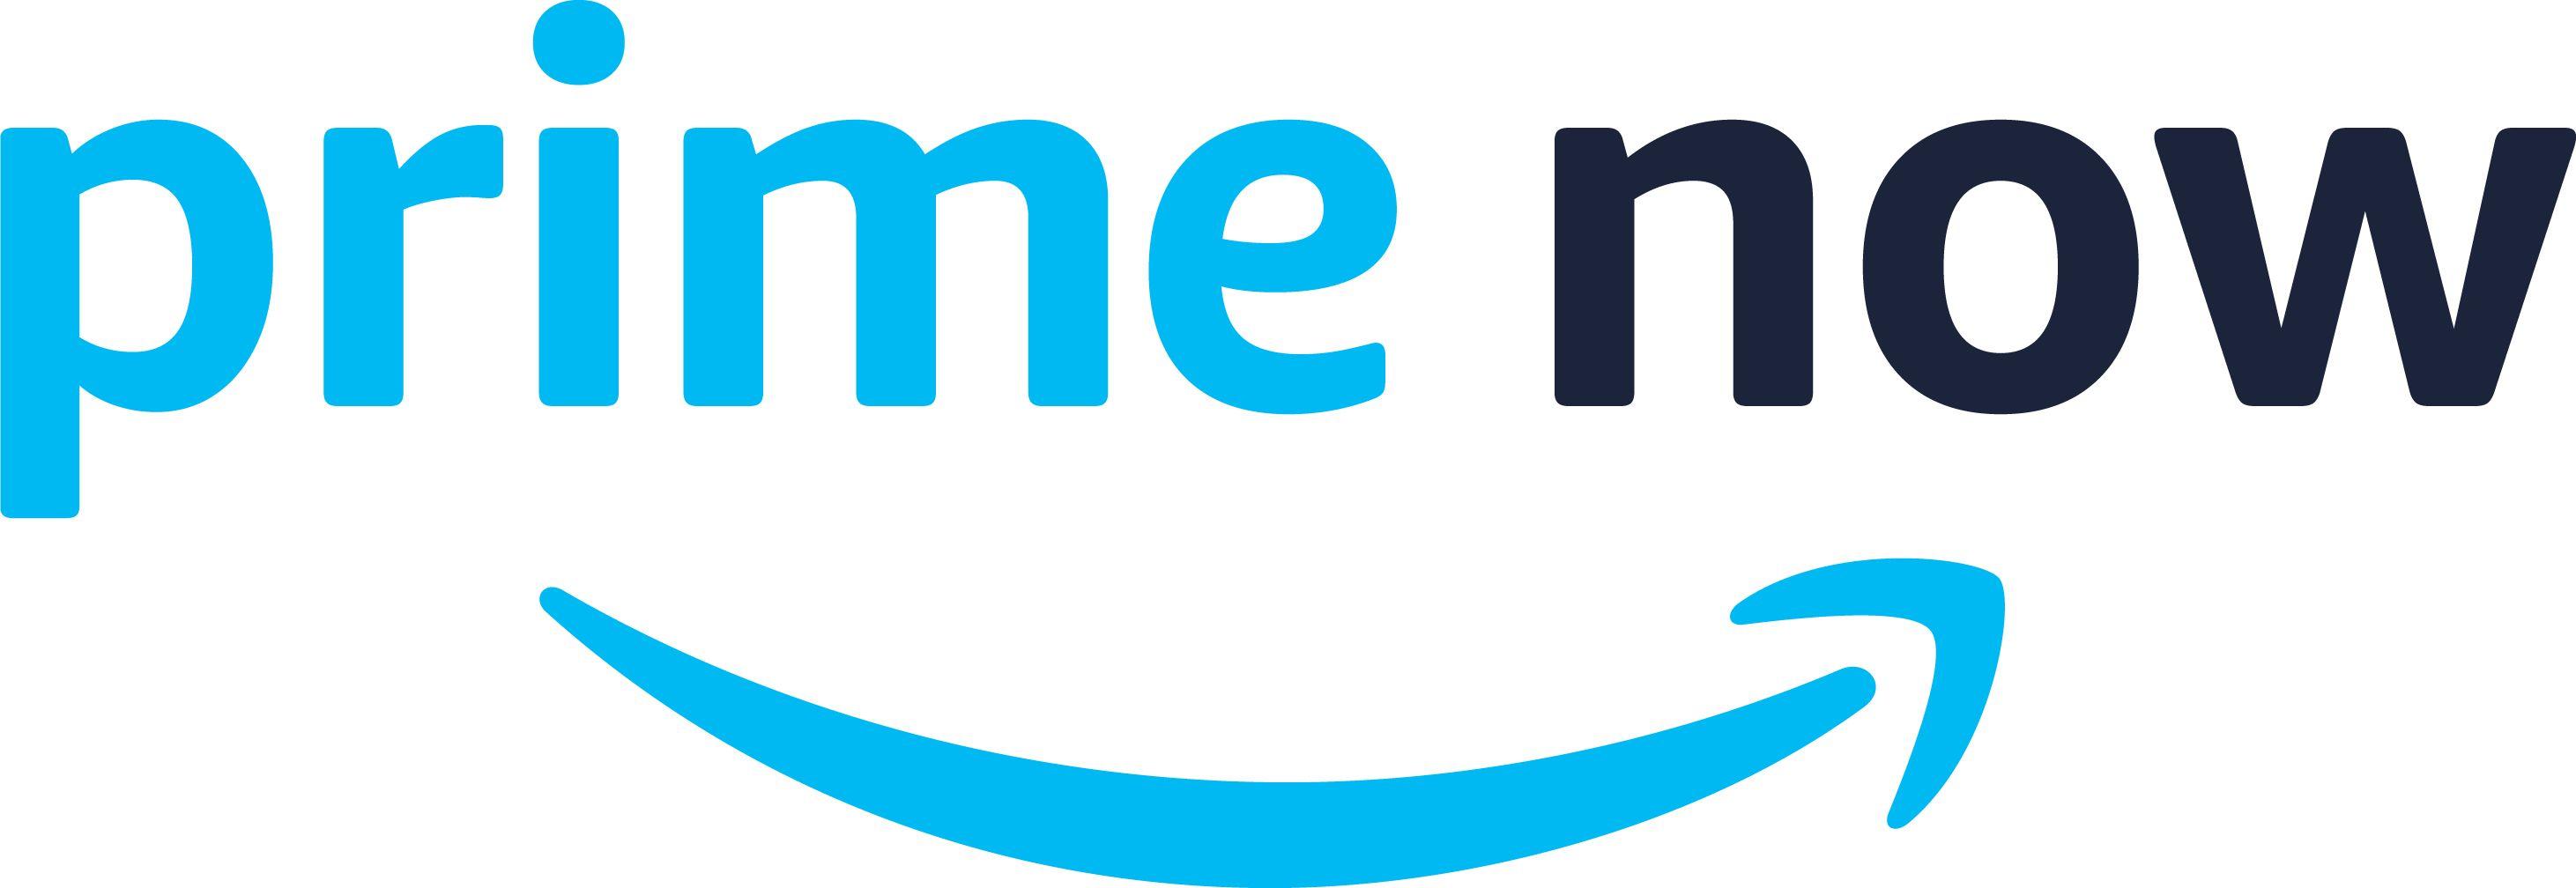 Amazon Corporate Logo - Images and videos | Amazon.com, Inc. - Press Room